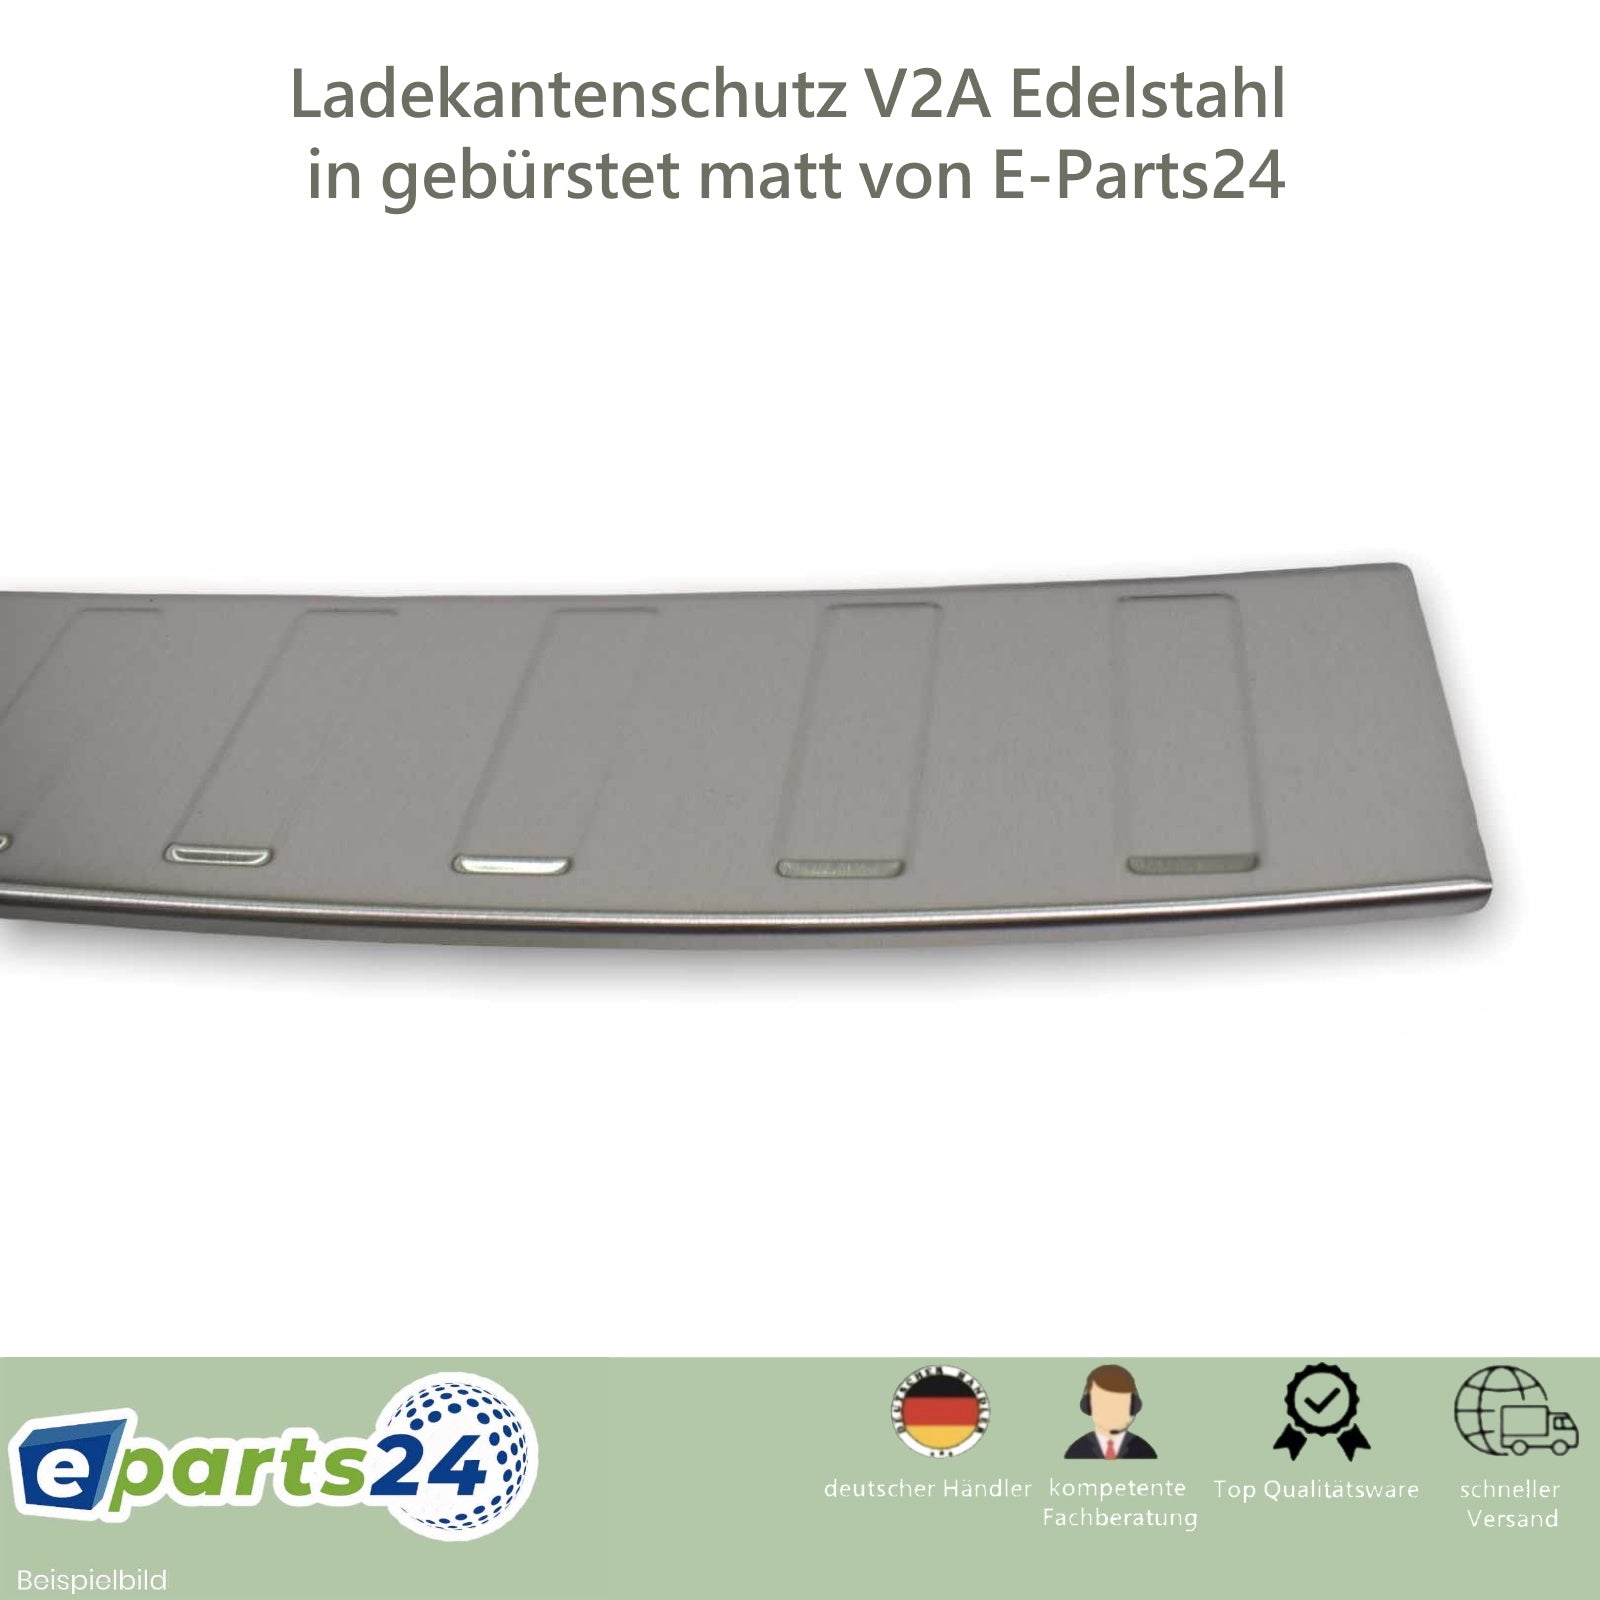 Edelstahl VW Ladekantenschutz – Bj Touran g 1T3 E-Parts24 für 2010-2015 Heckschutz